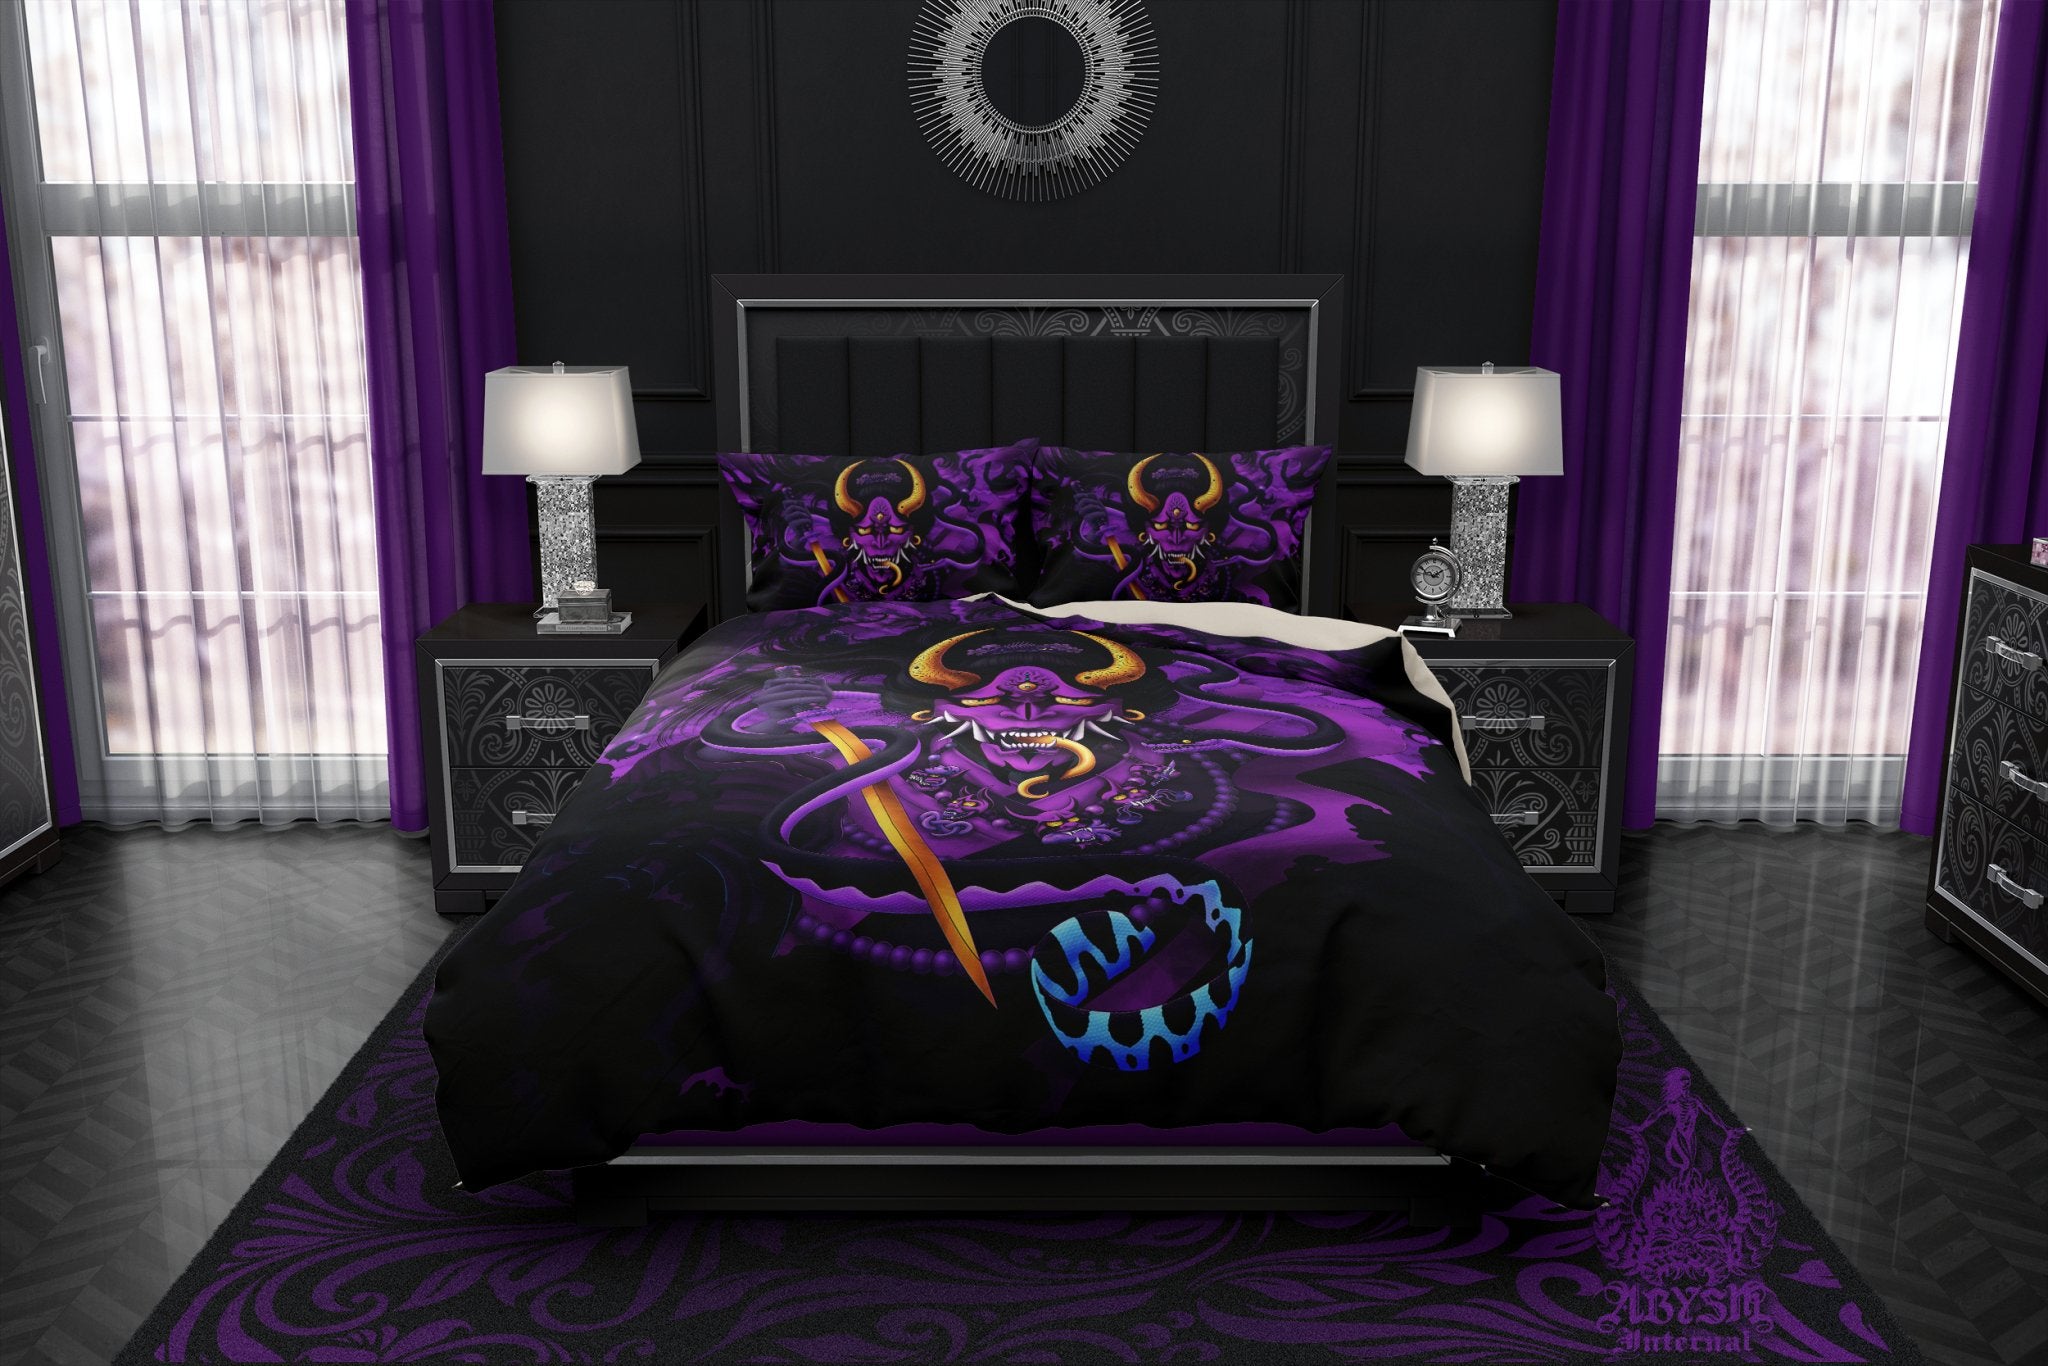 Pastel Goth Bedding Set, Comforter or Duvet, Anime Hannya Bed Cover, Japanese Demon Bedroom Decor, King, Queen & Twin Size - Snake, Black and Purple - Abysm Internal